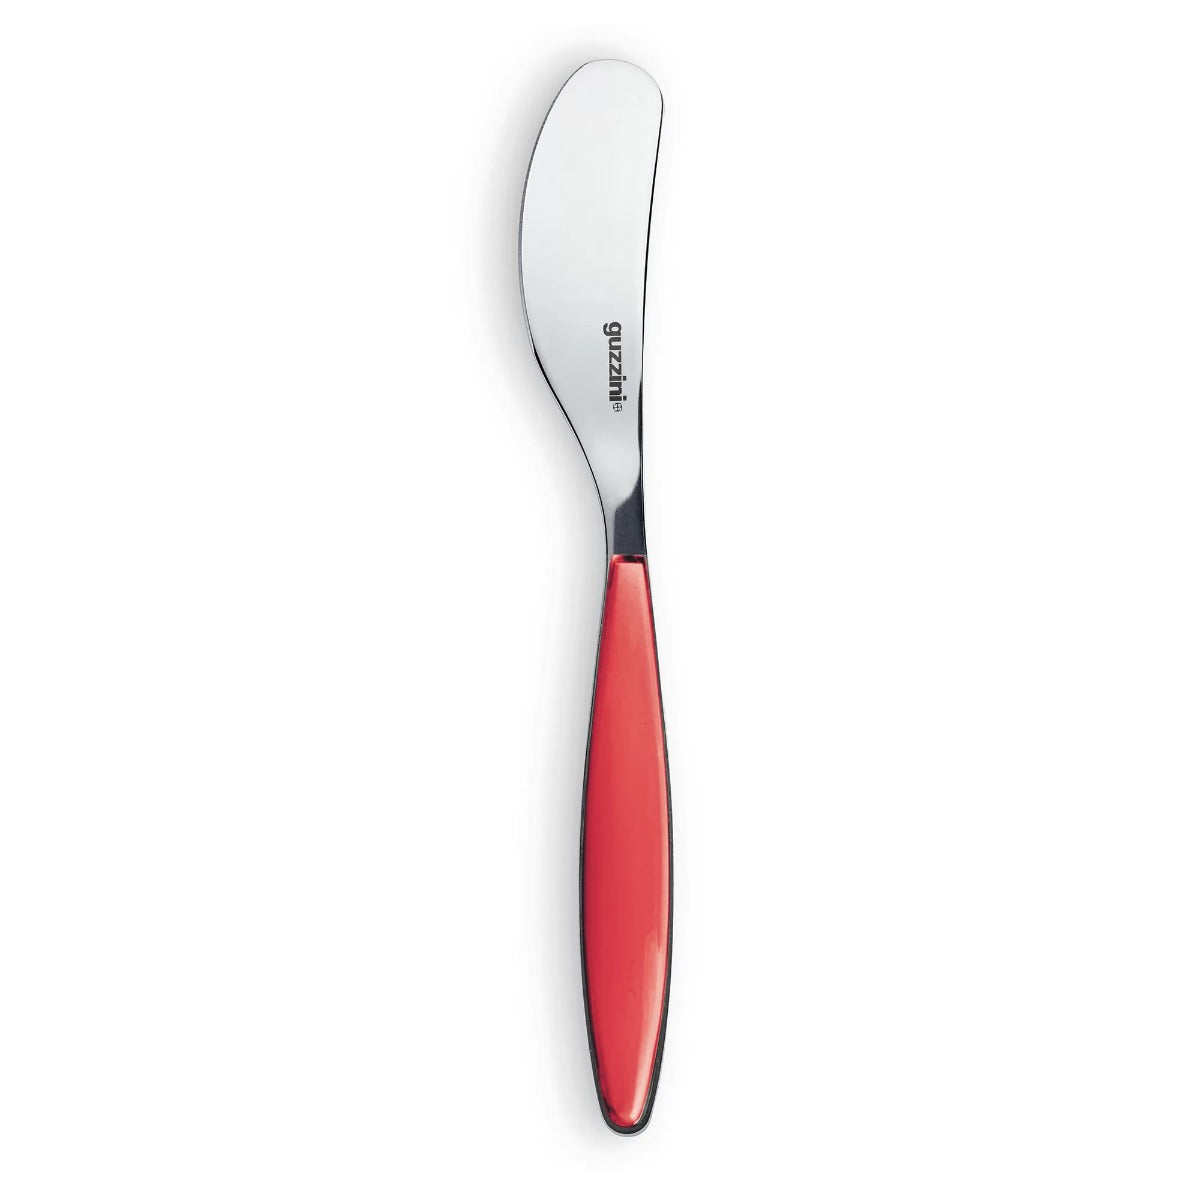 Guzzini butter knife, red